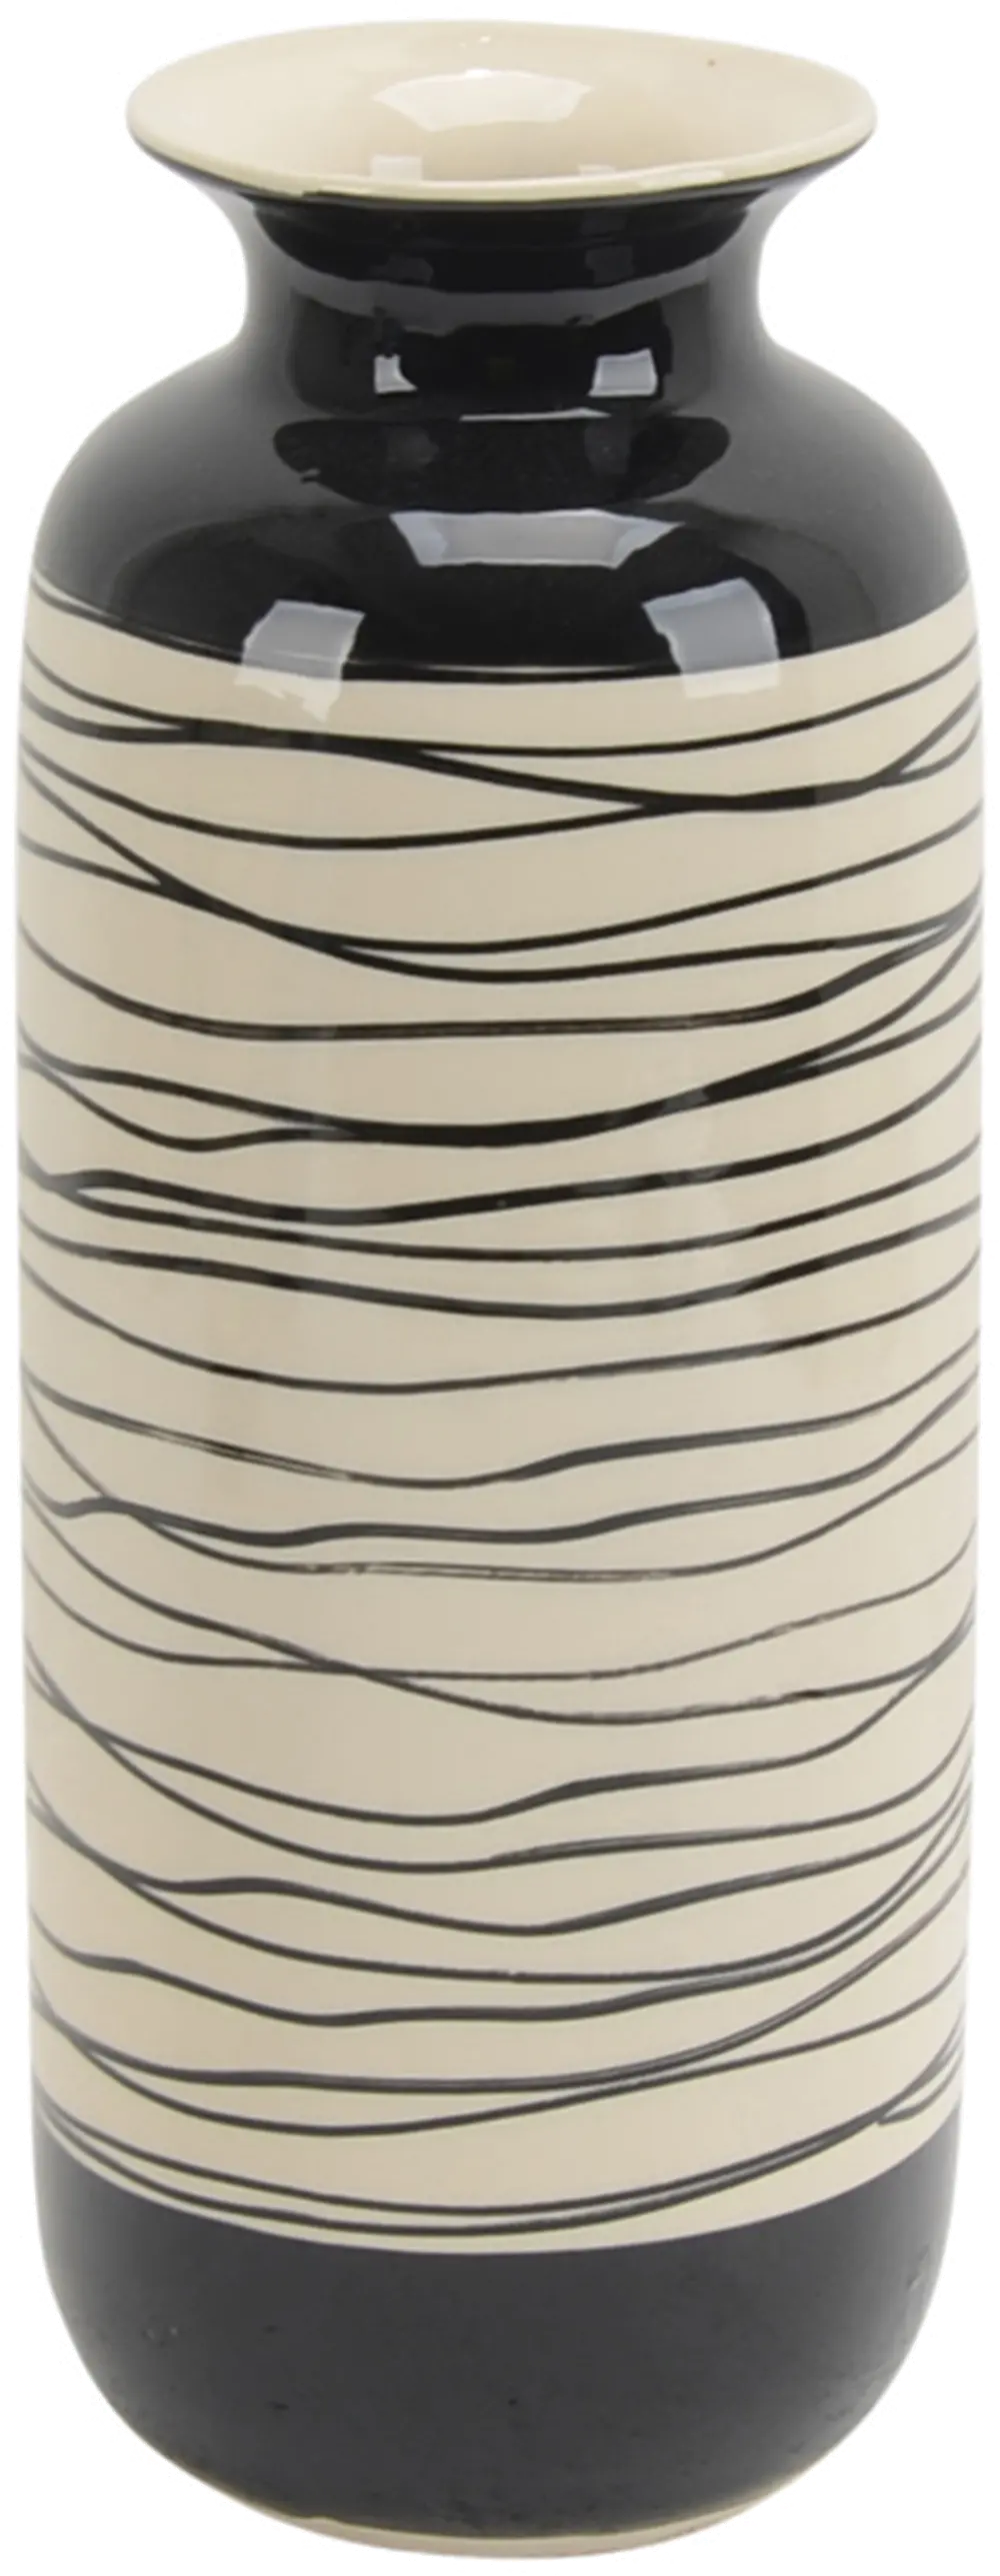 14 Inch Black and White Swirl Ceramic Vase-1